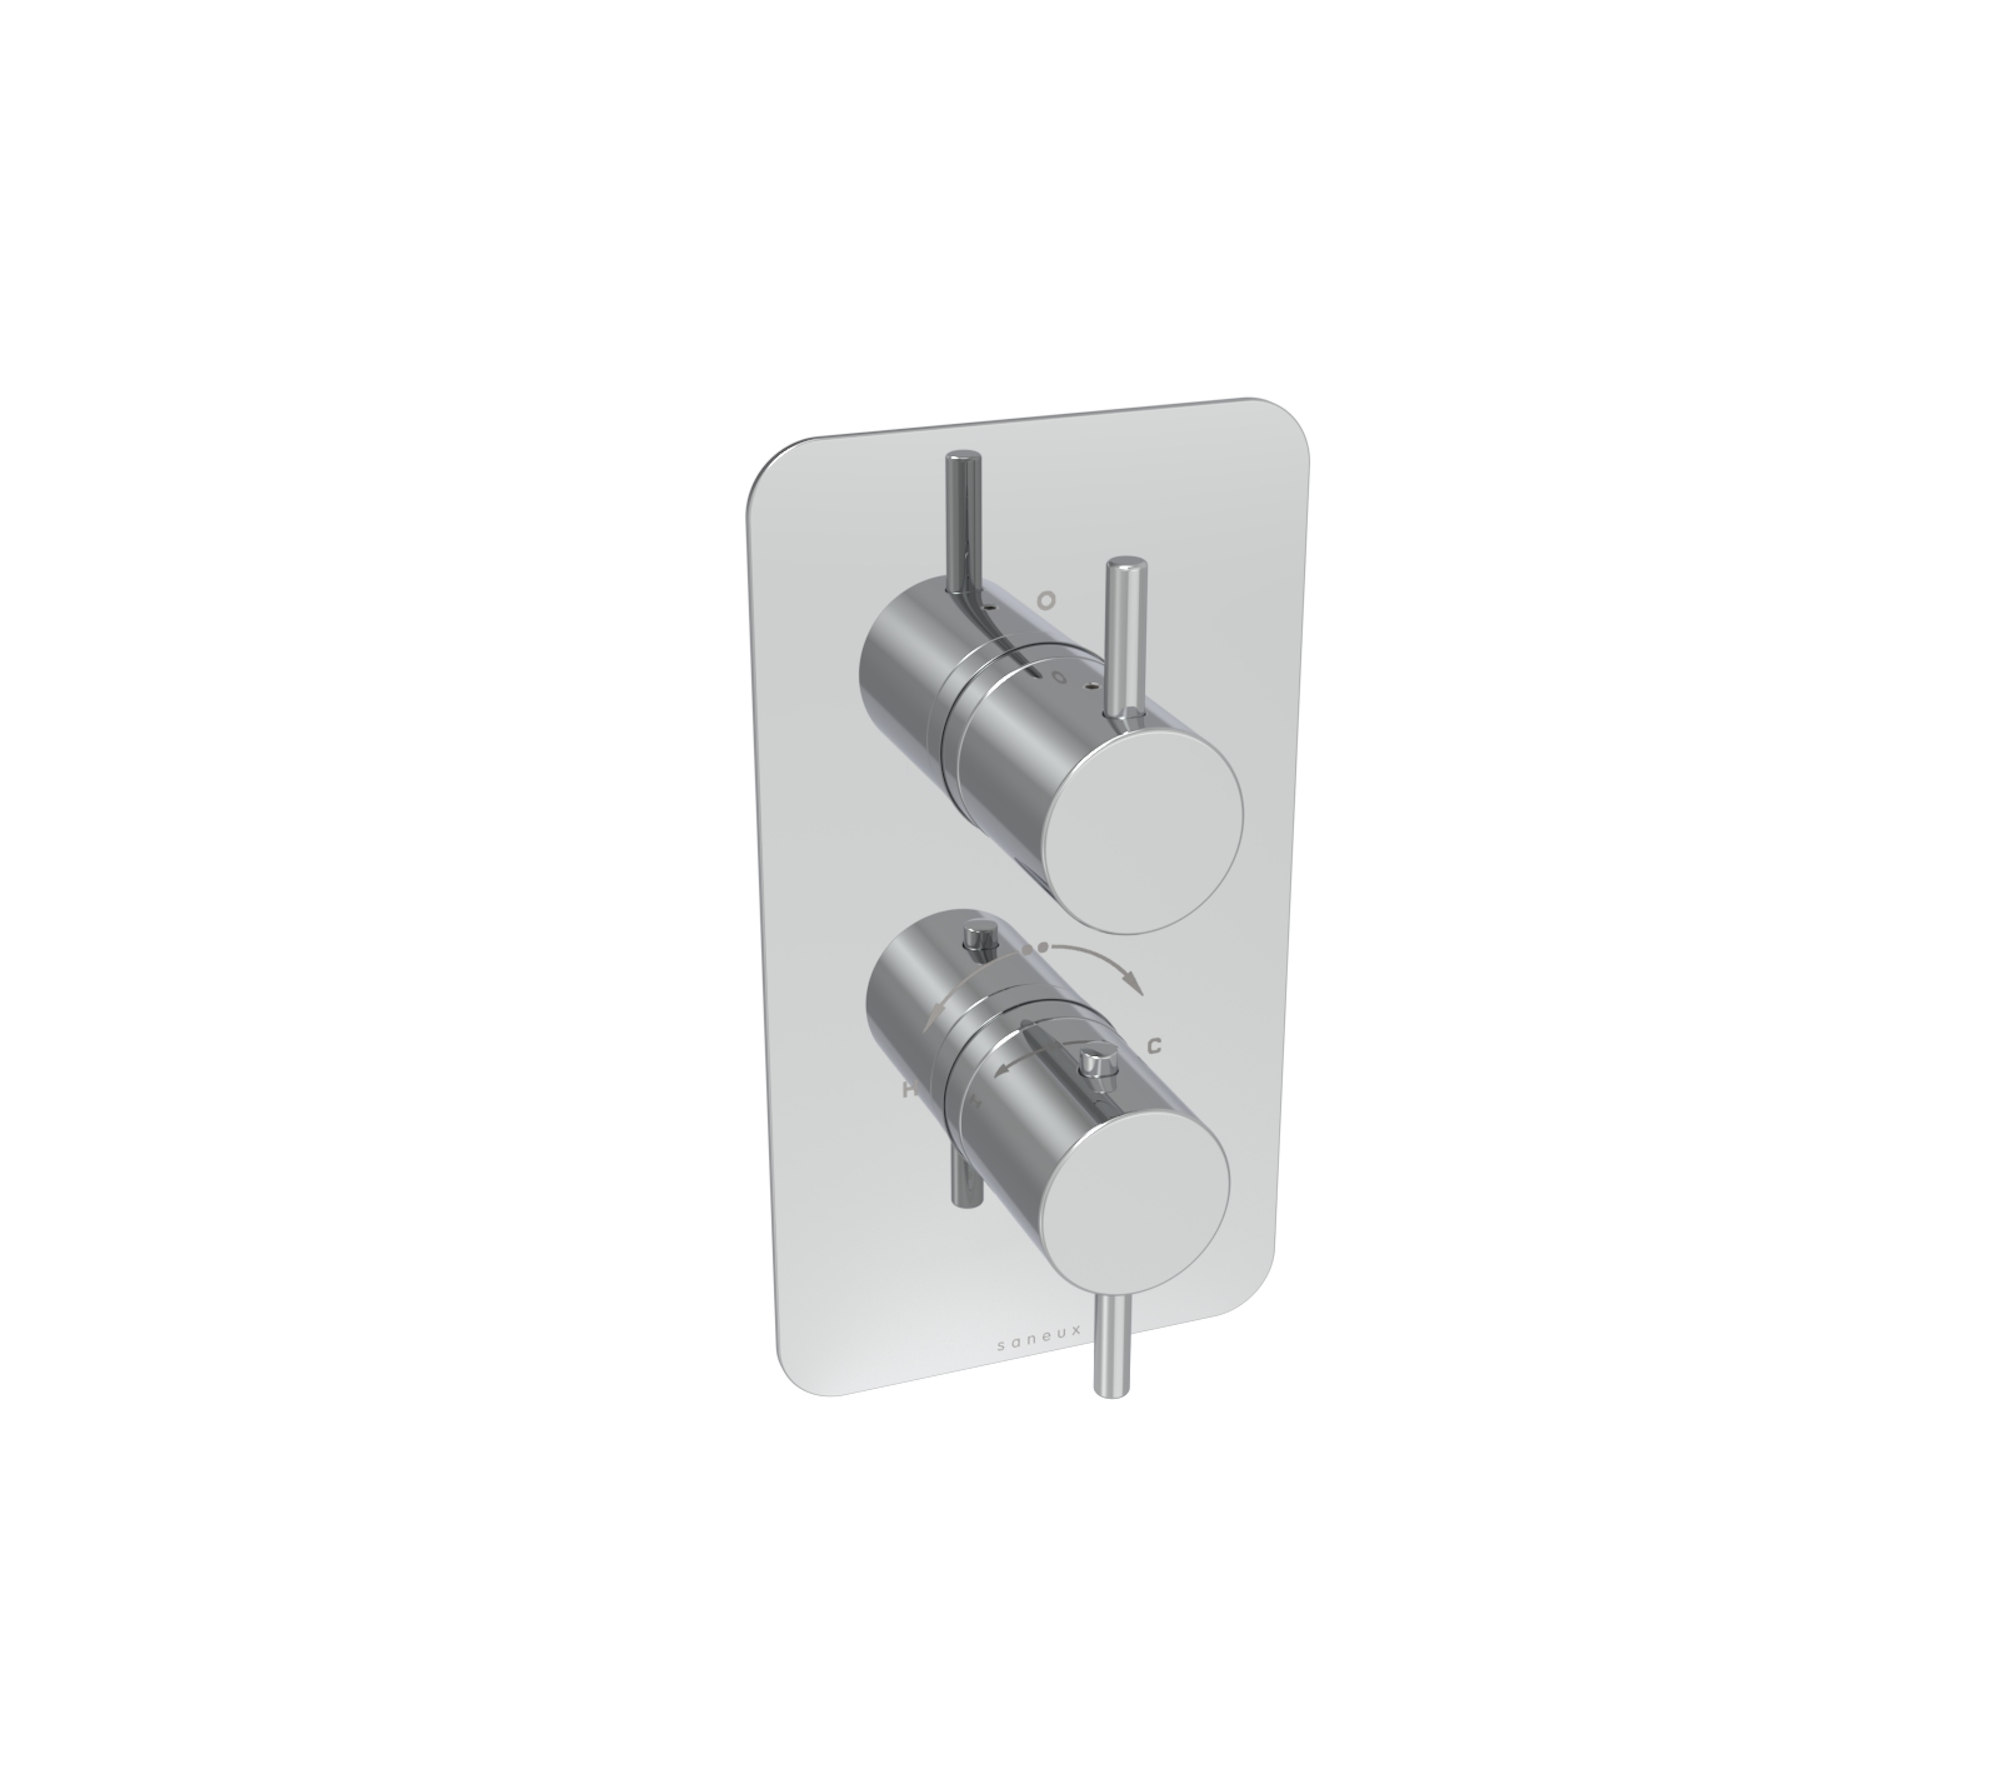 COS 1 way thermostatic shower valve kit - Chrome